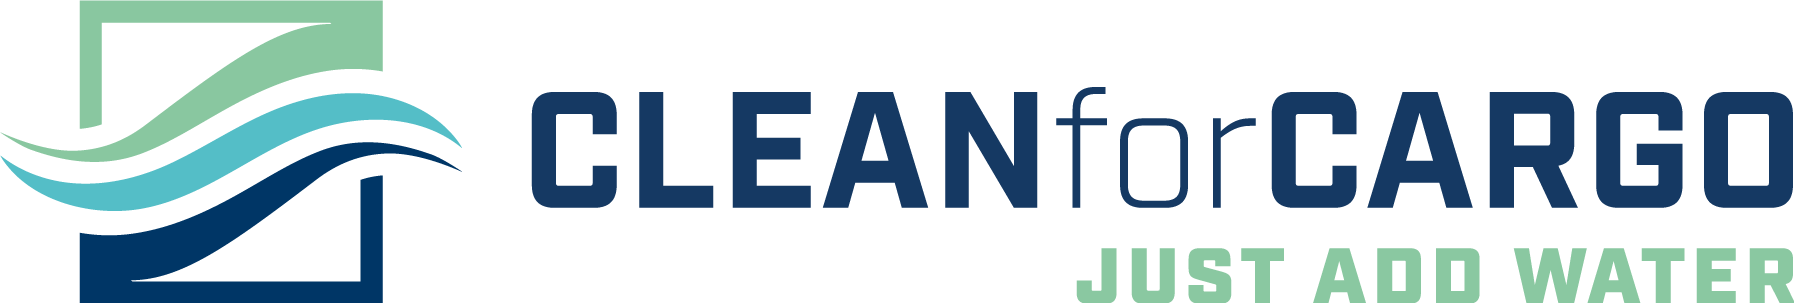 Clean-for-Cargo-logo